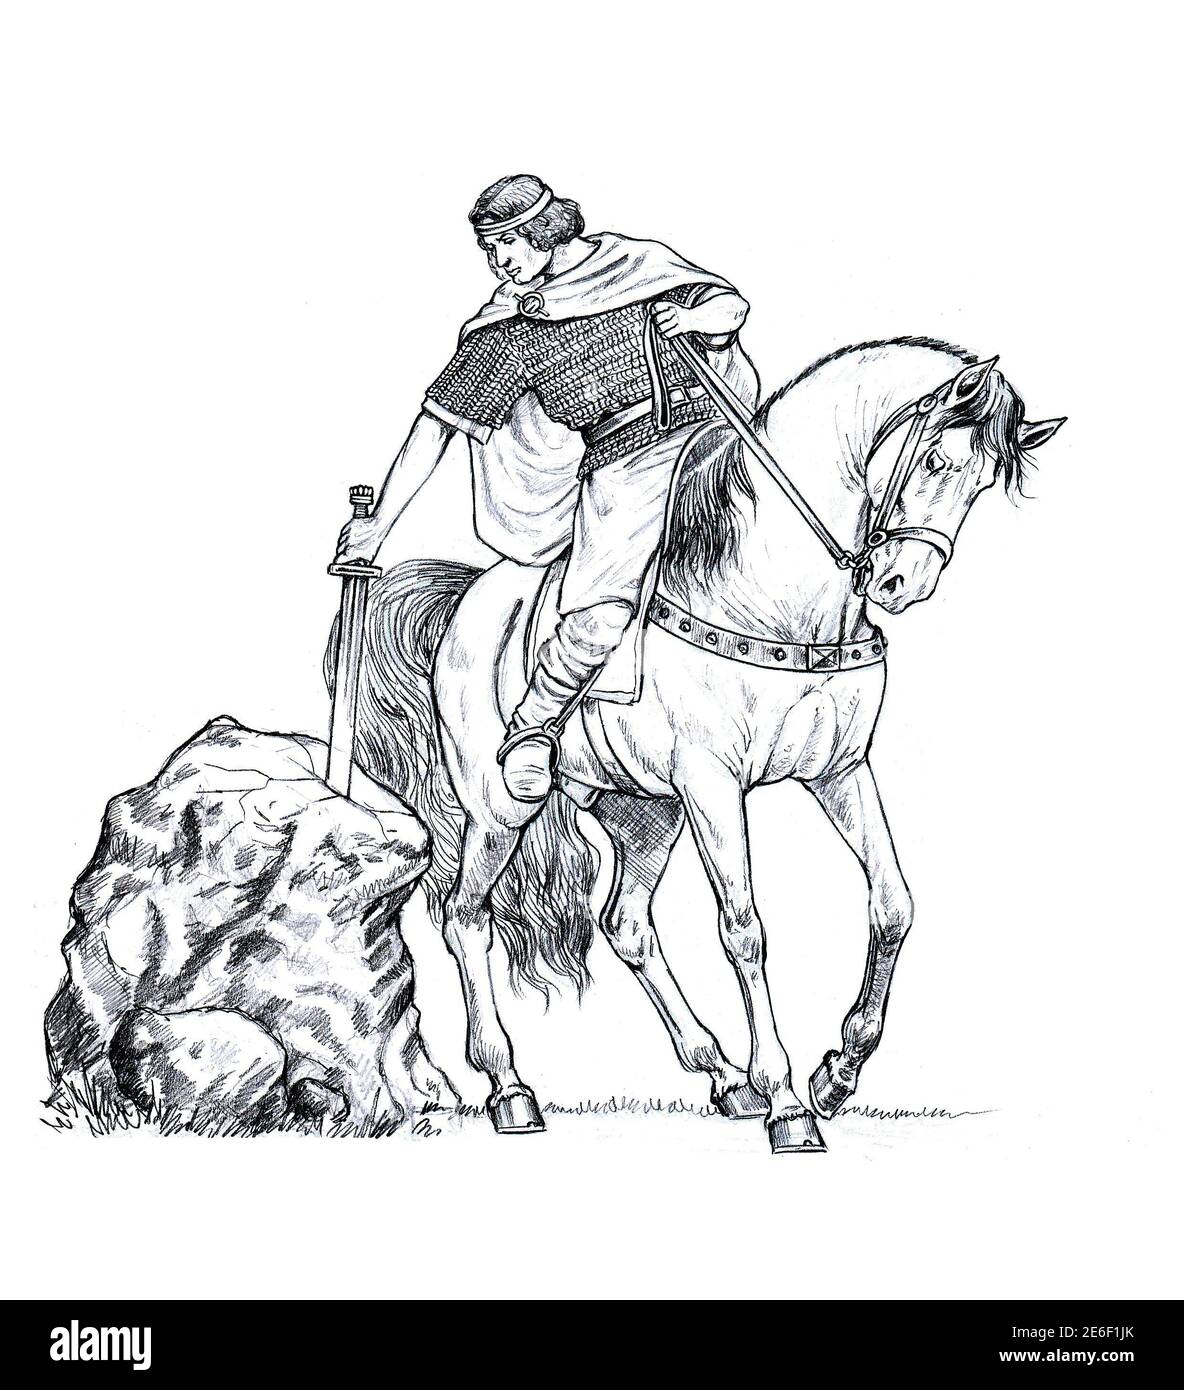 king arthur sketch